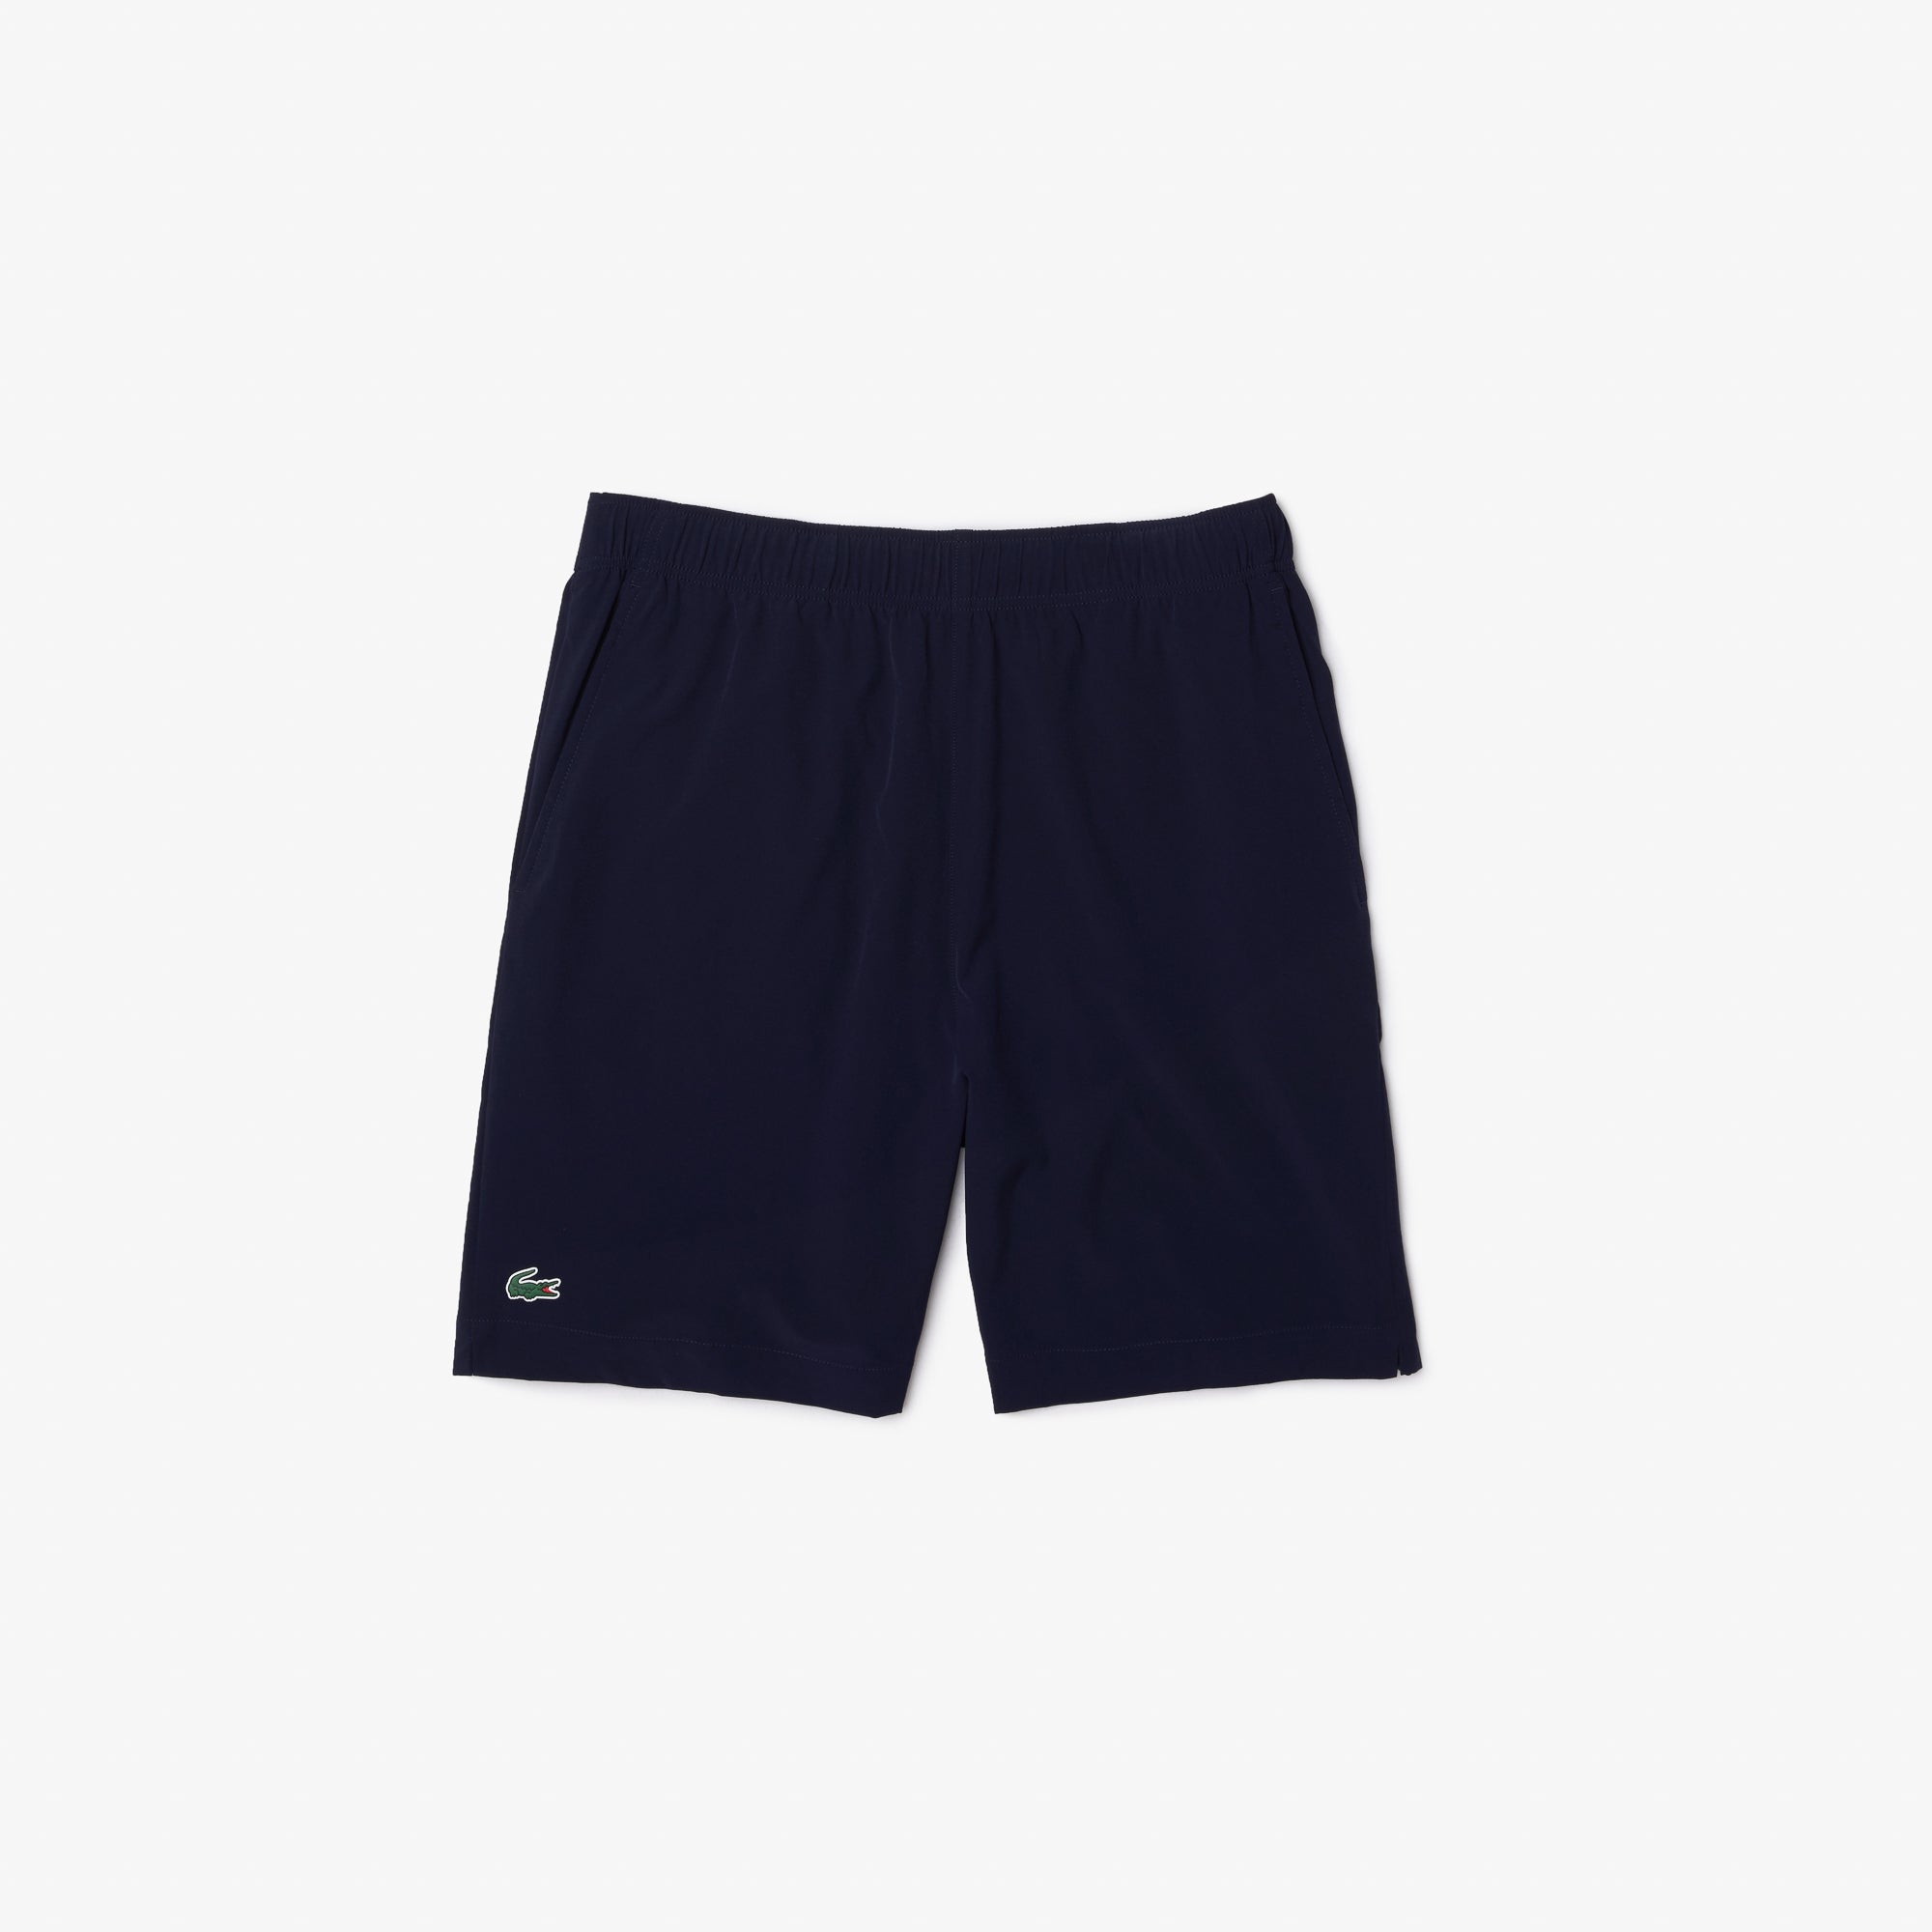 Se Lacoste Shorts (Navy) - XL hos Padellife